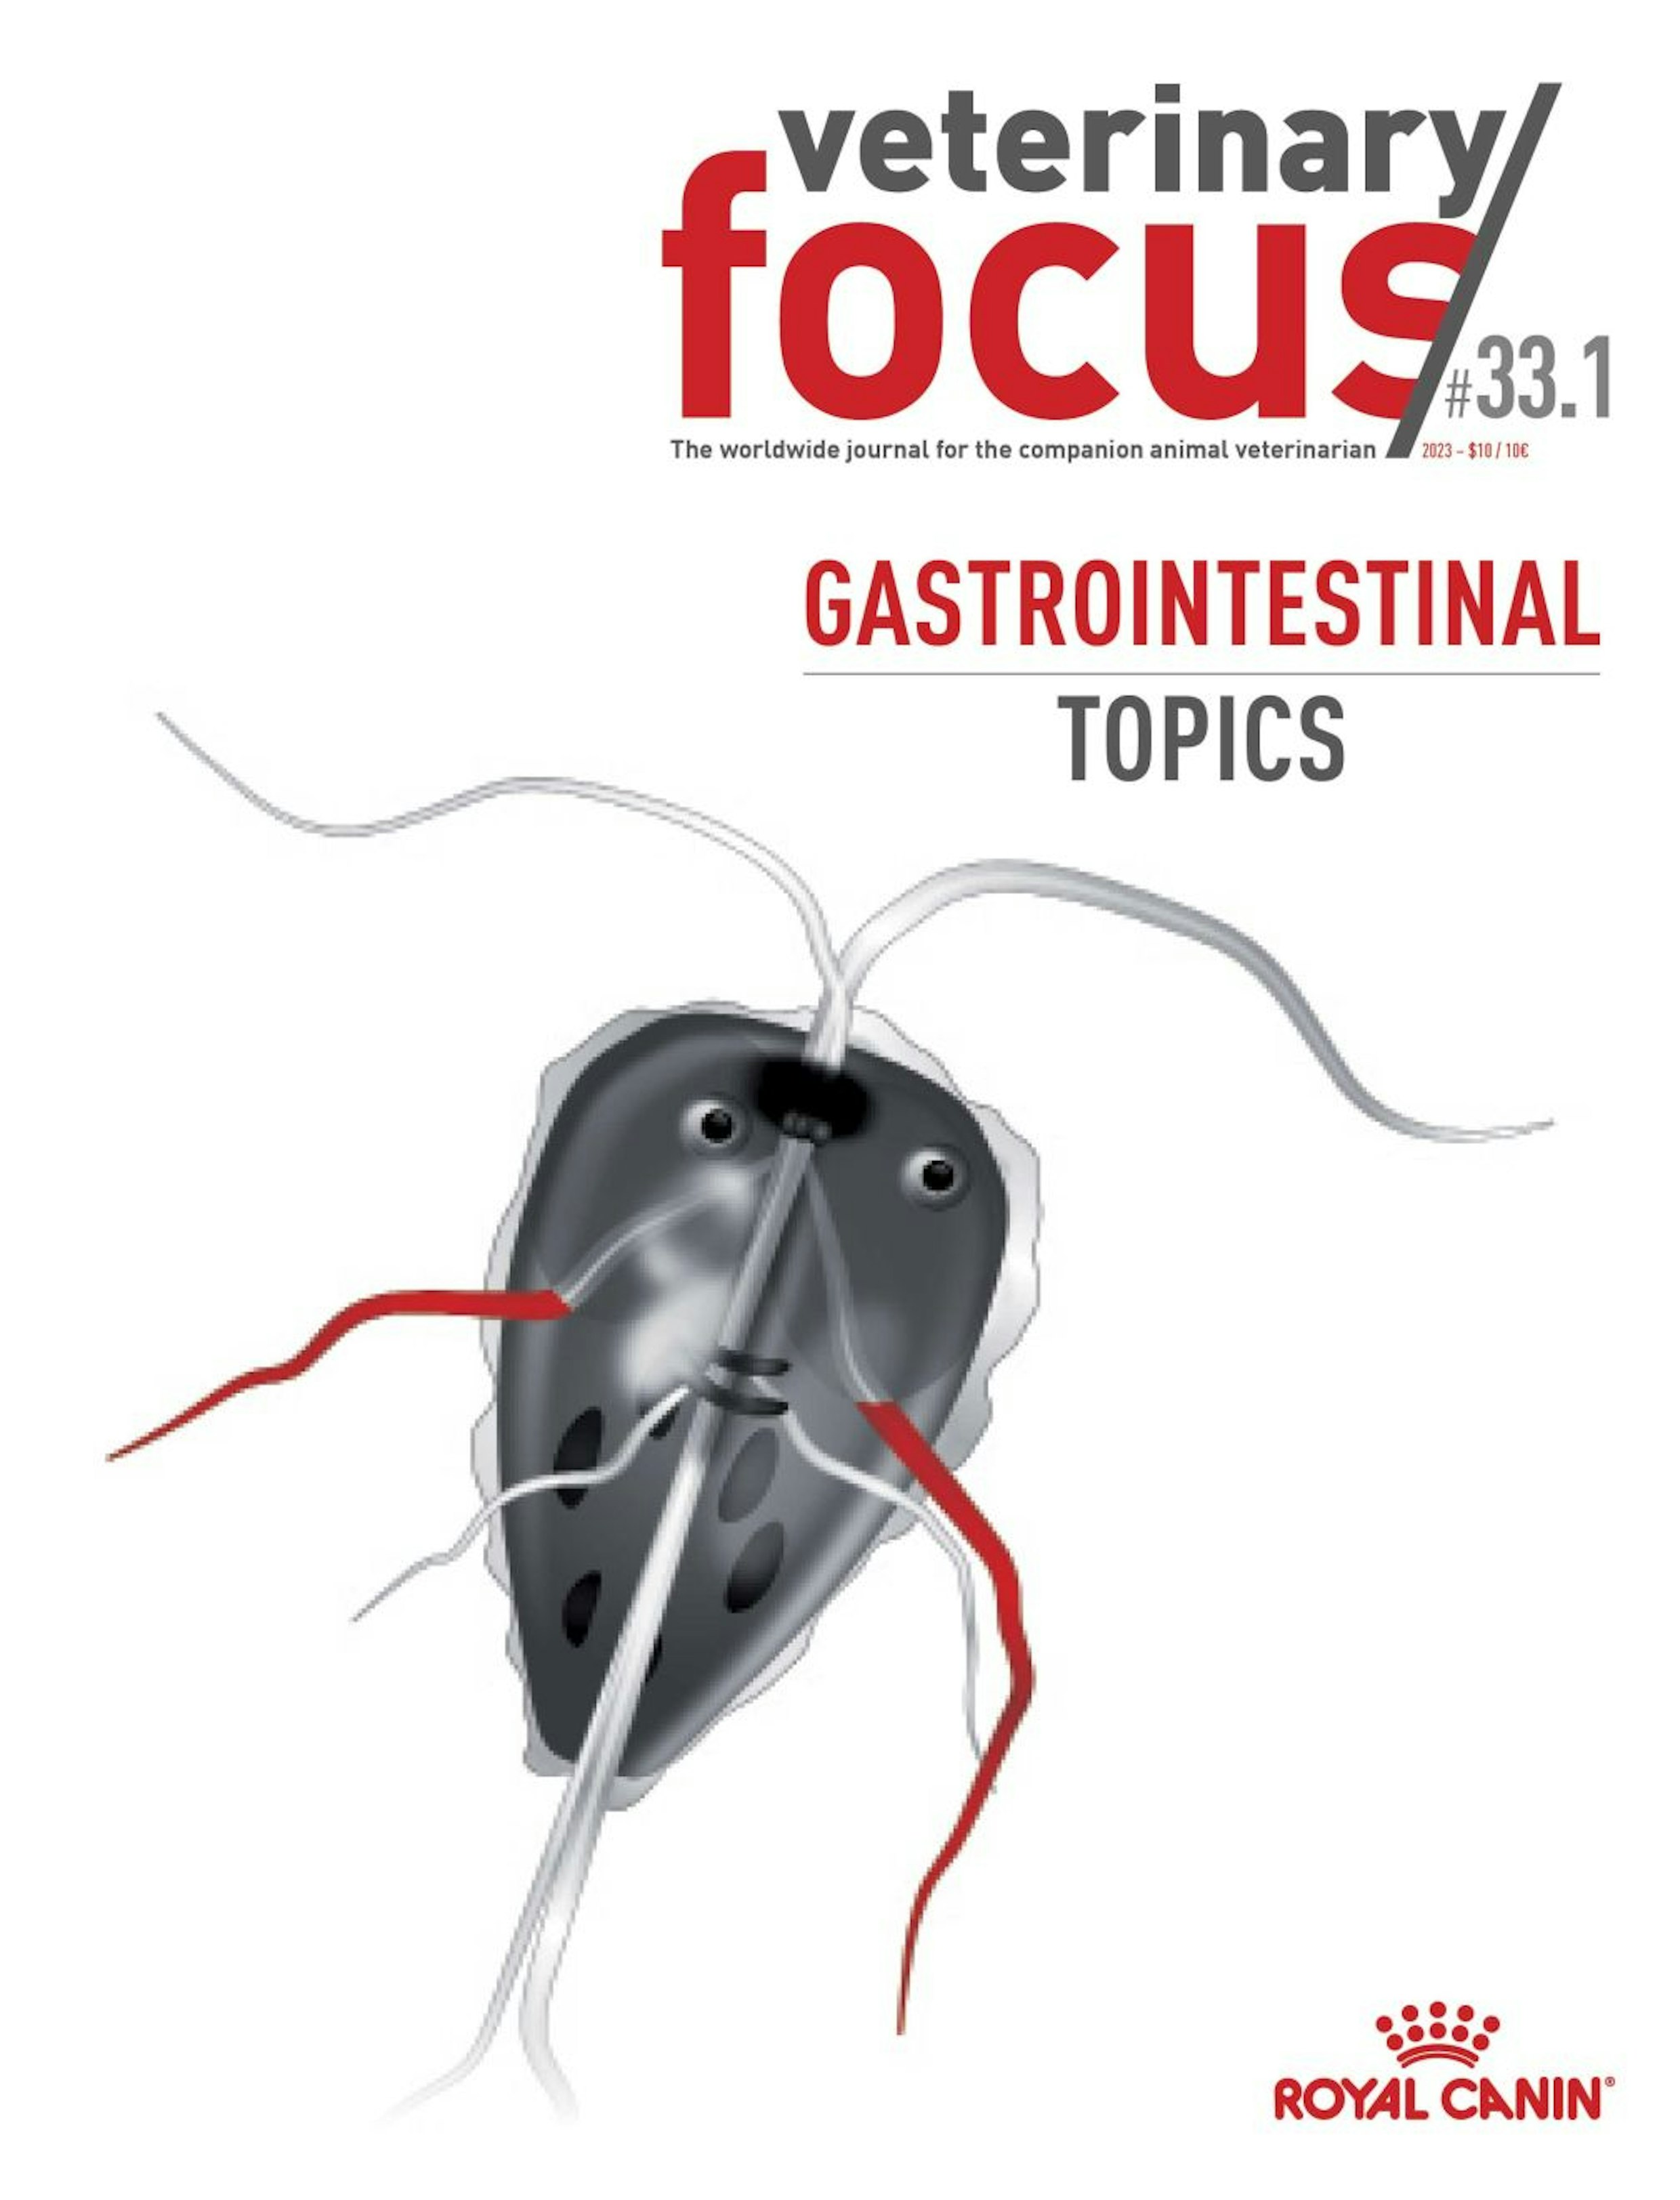 Gastrointestinal topics